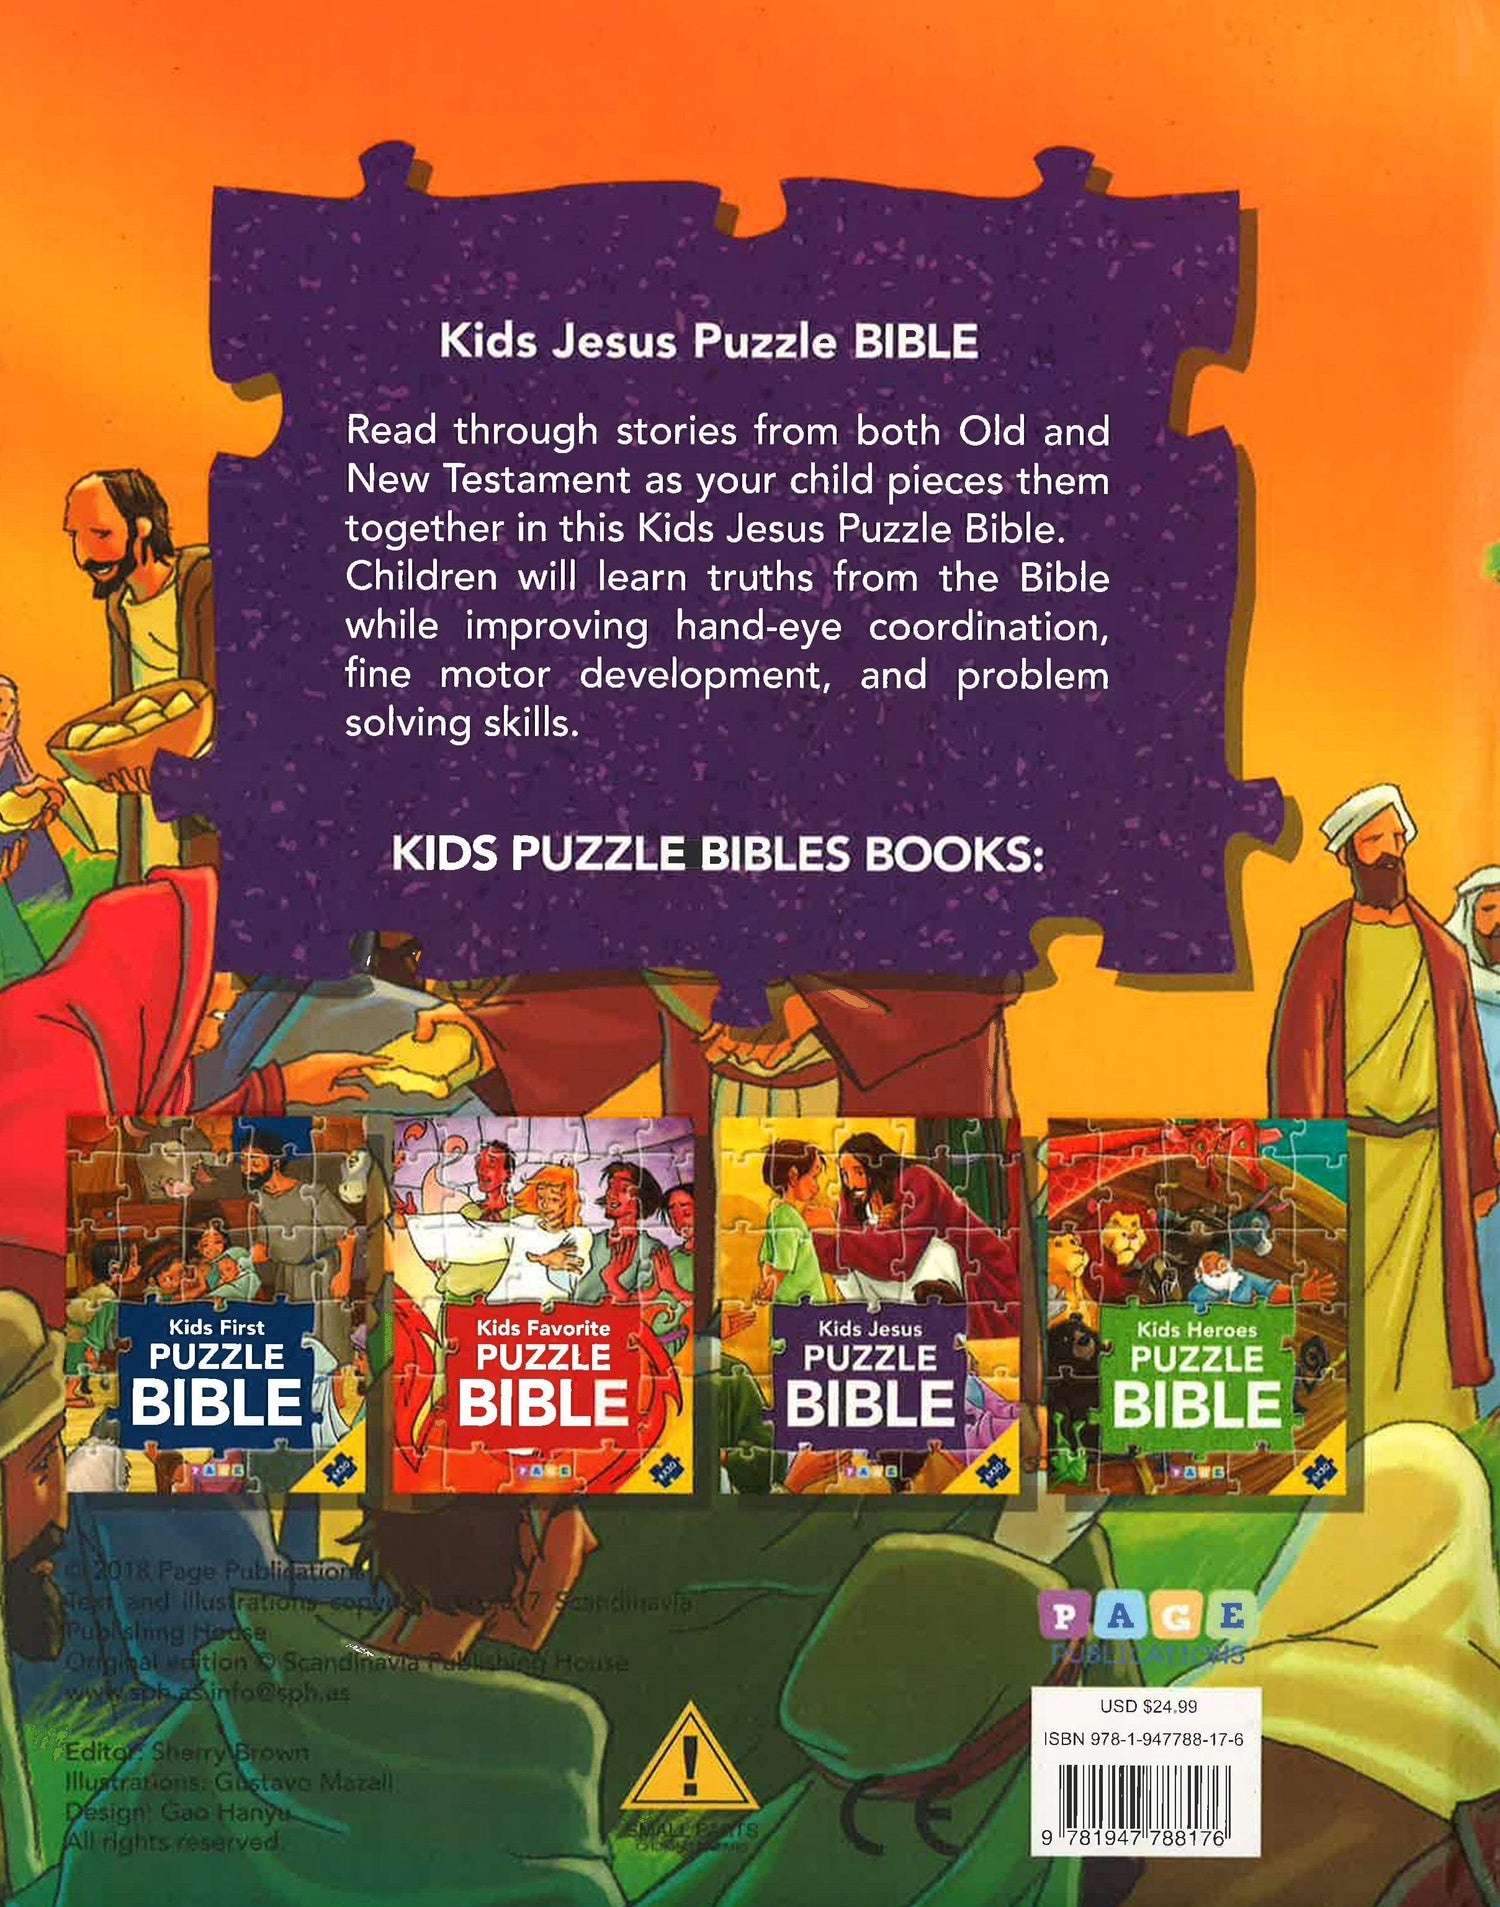 Kids Jesus Puzzle Bible